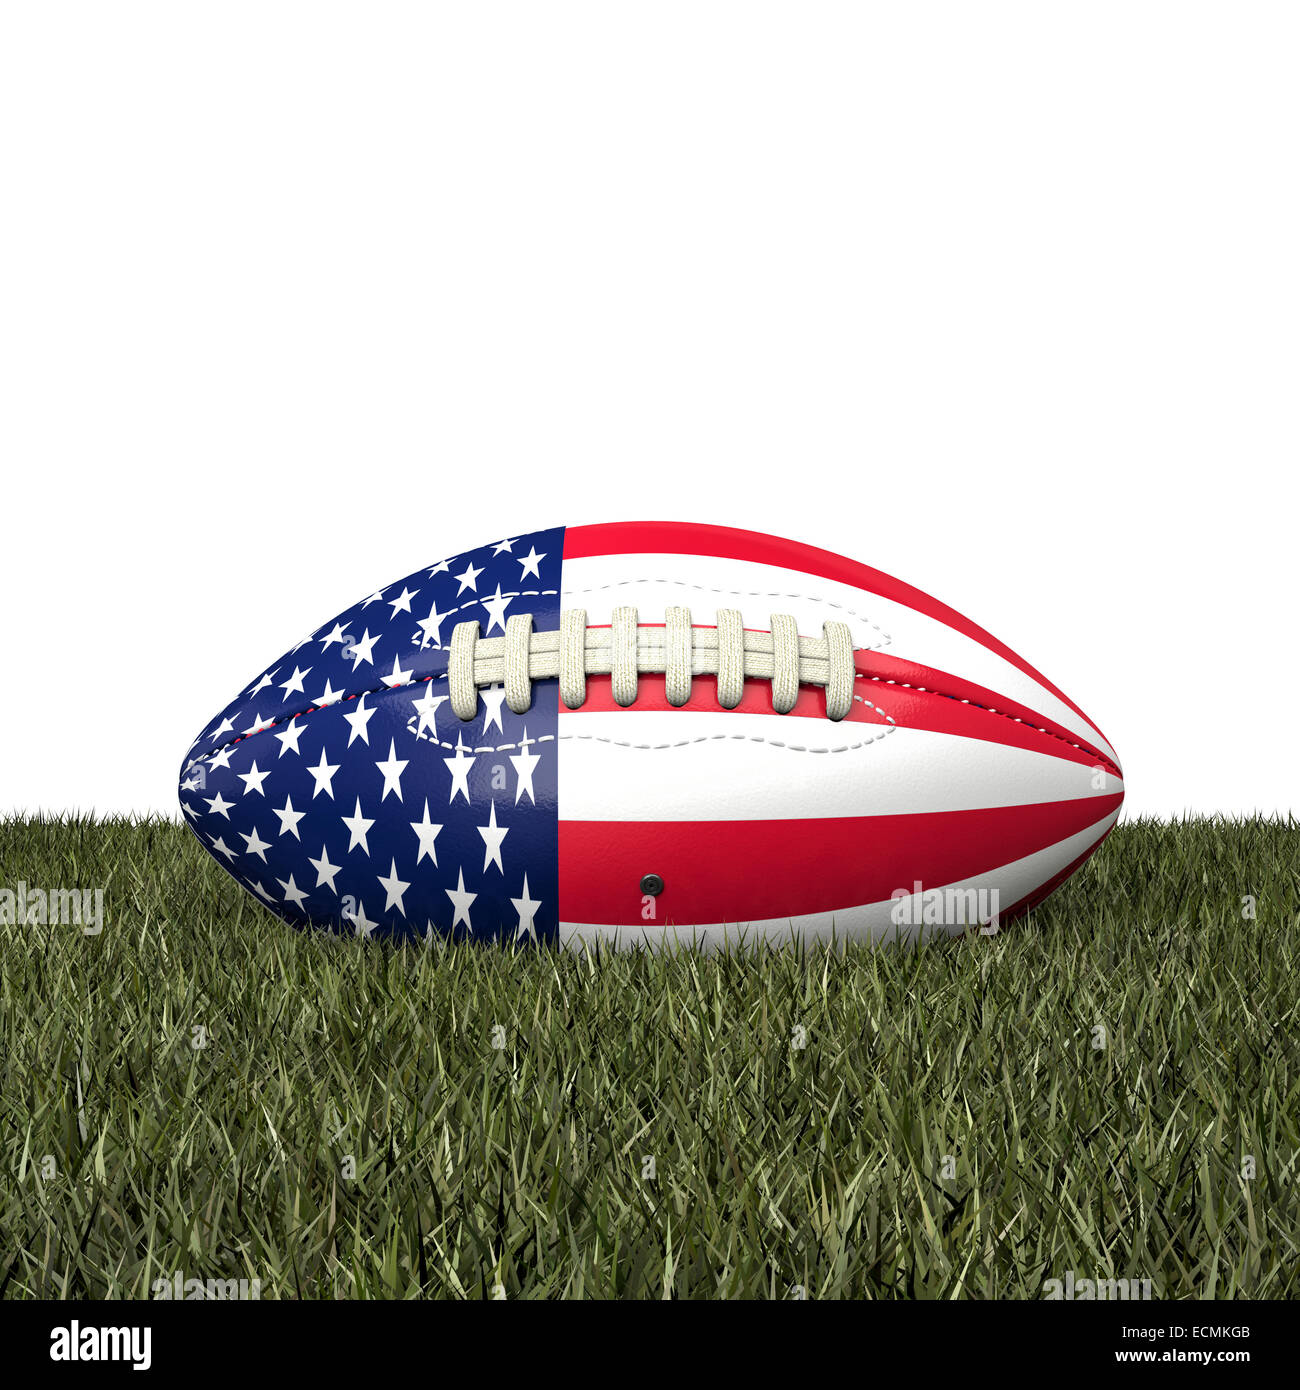 american football ball with usa flag on grass Stock Photo